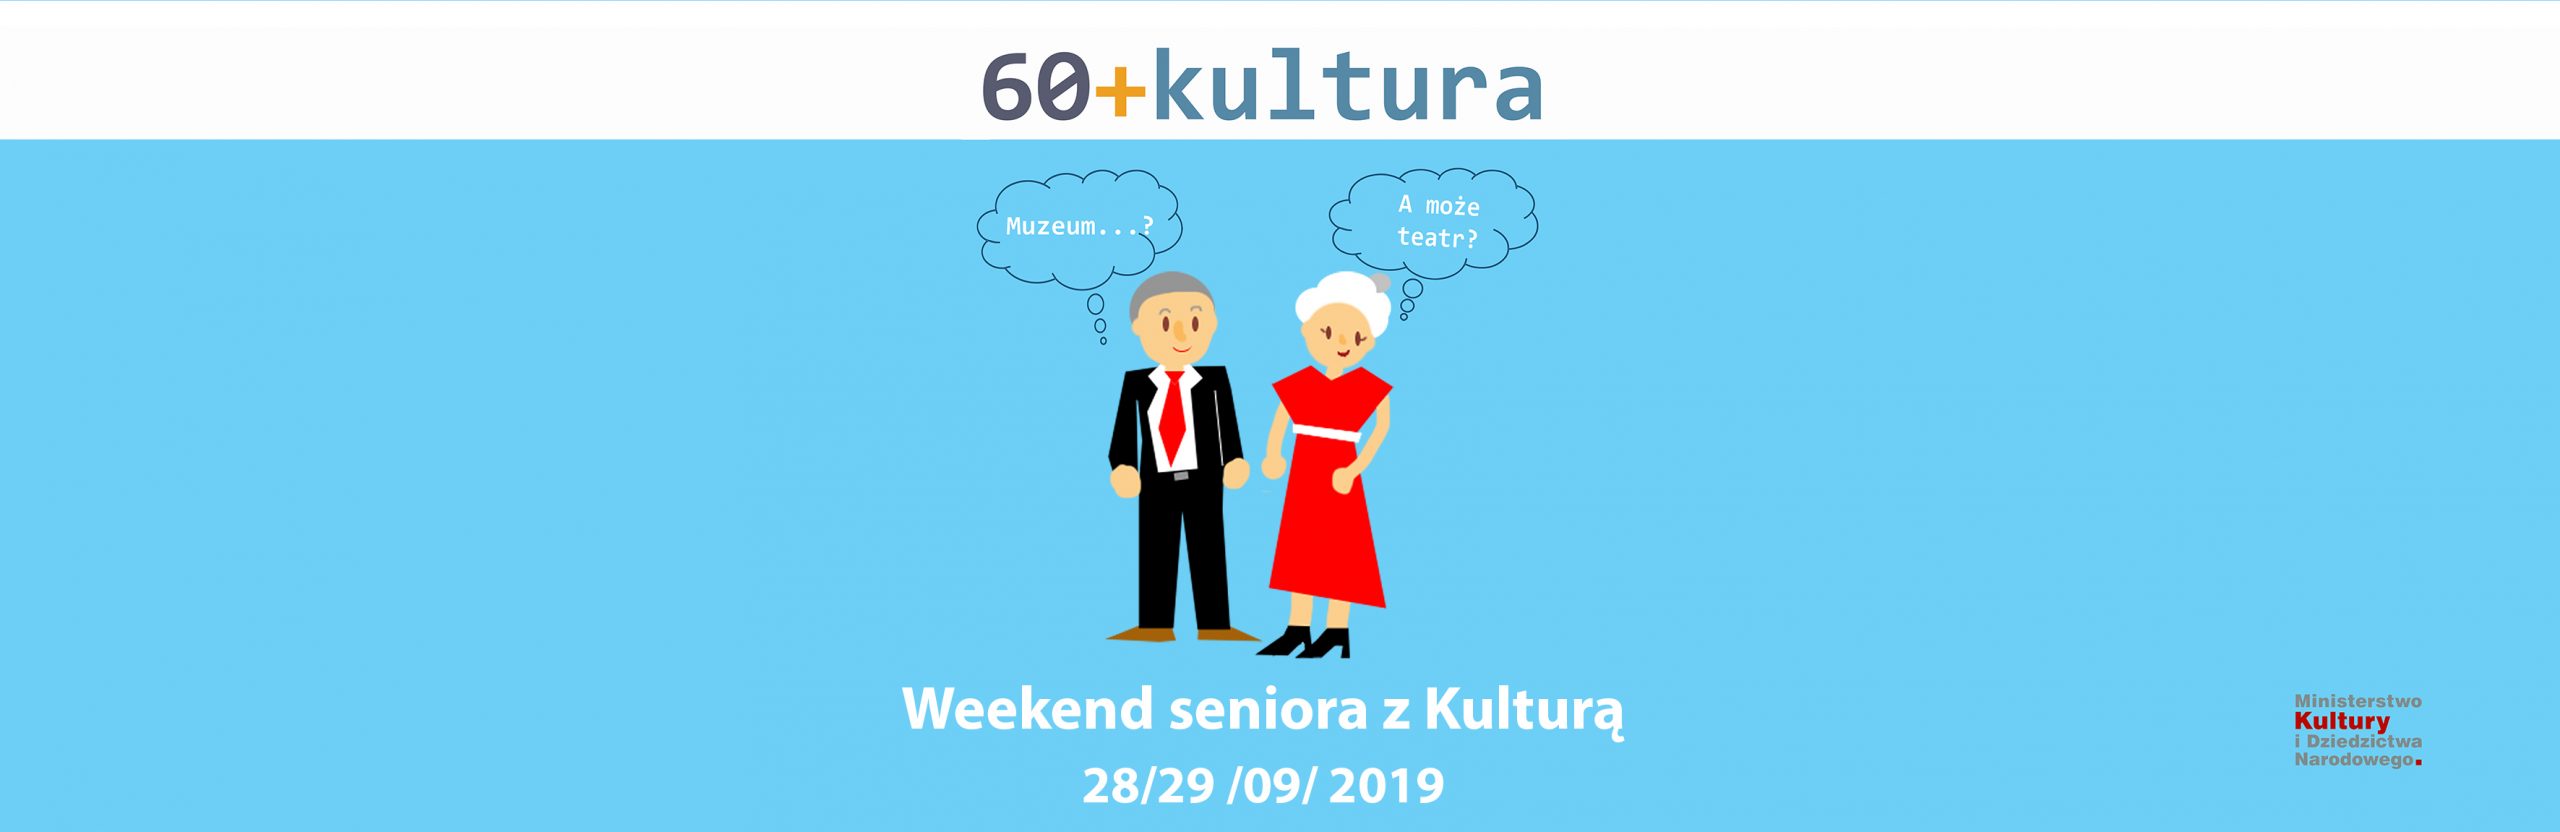 Plakat akcji "Weekend seniora z Kulturą"